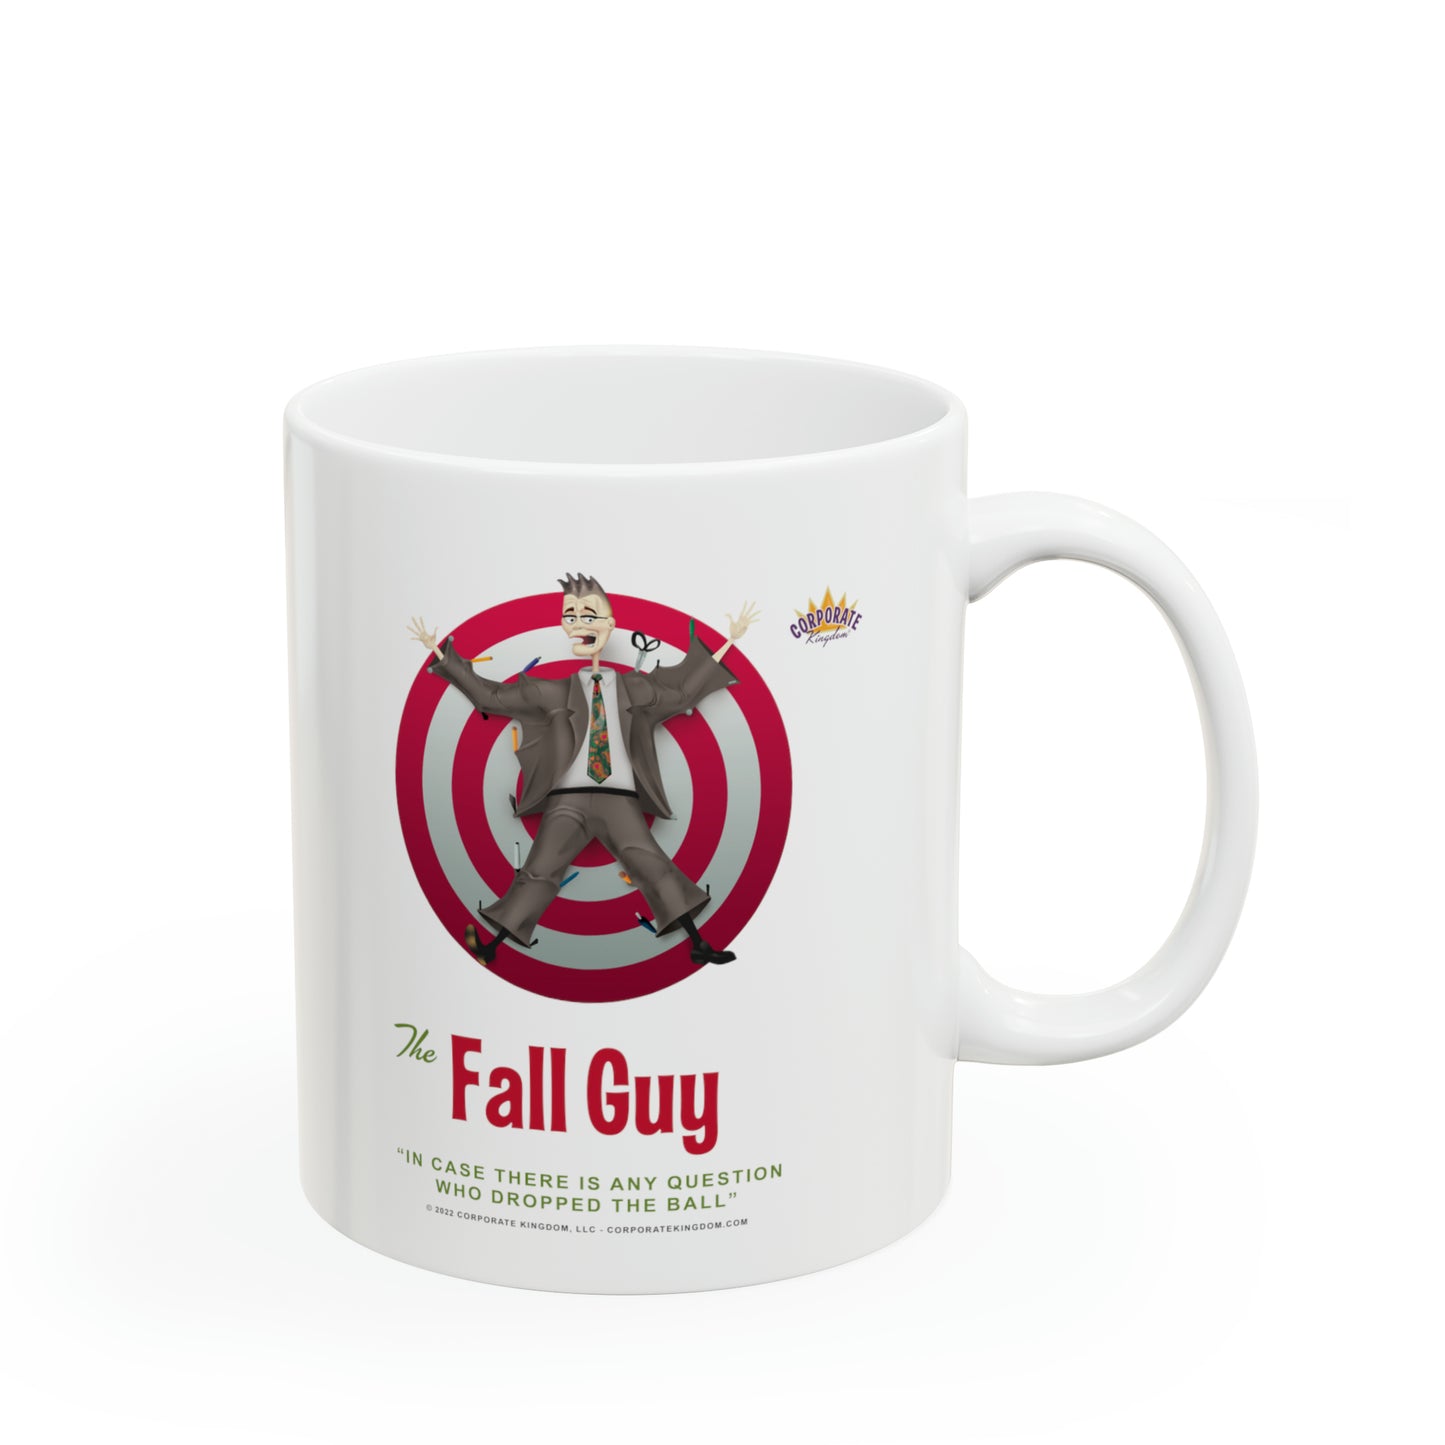 Fall Guy Coffee Mug by Corporate Kingdom®